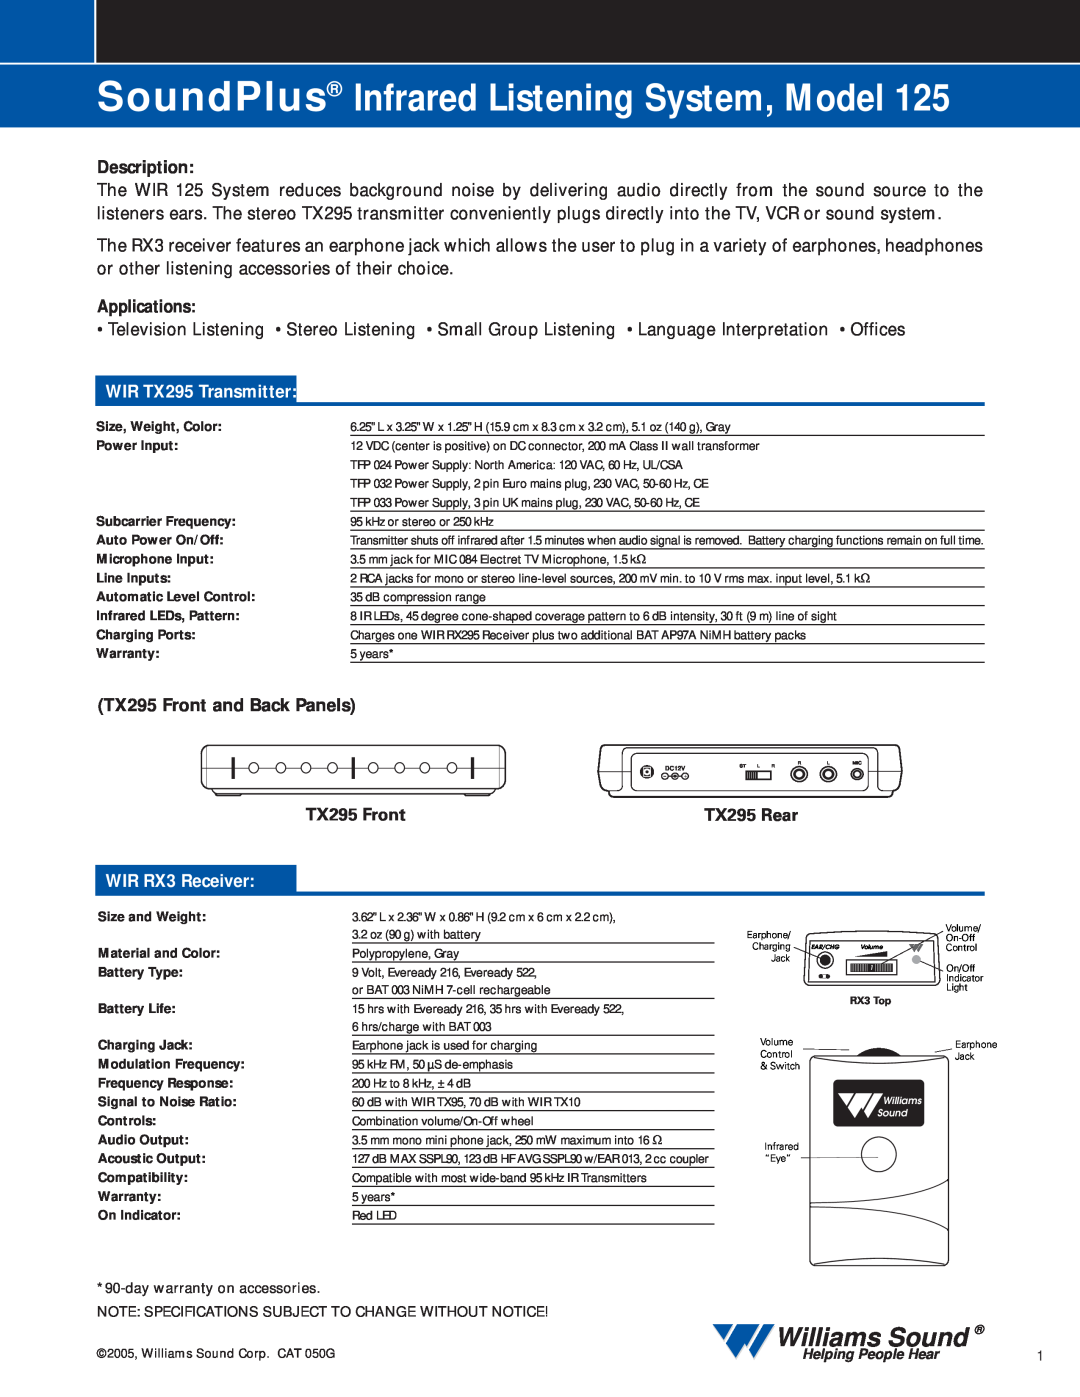 Williams Sound 125 warranty SoundPlus Infrared Listening System, Model, Williams Sound, Description, Applications 